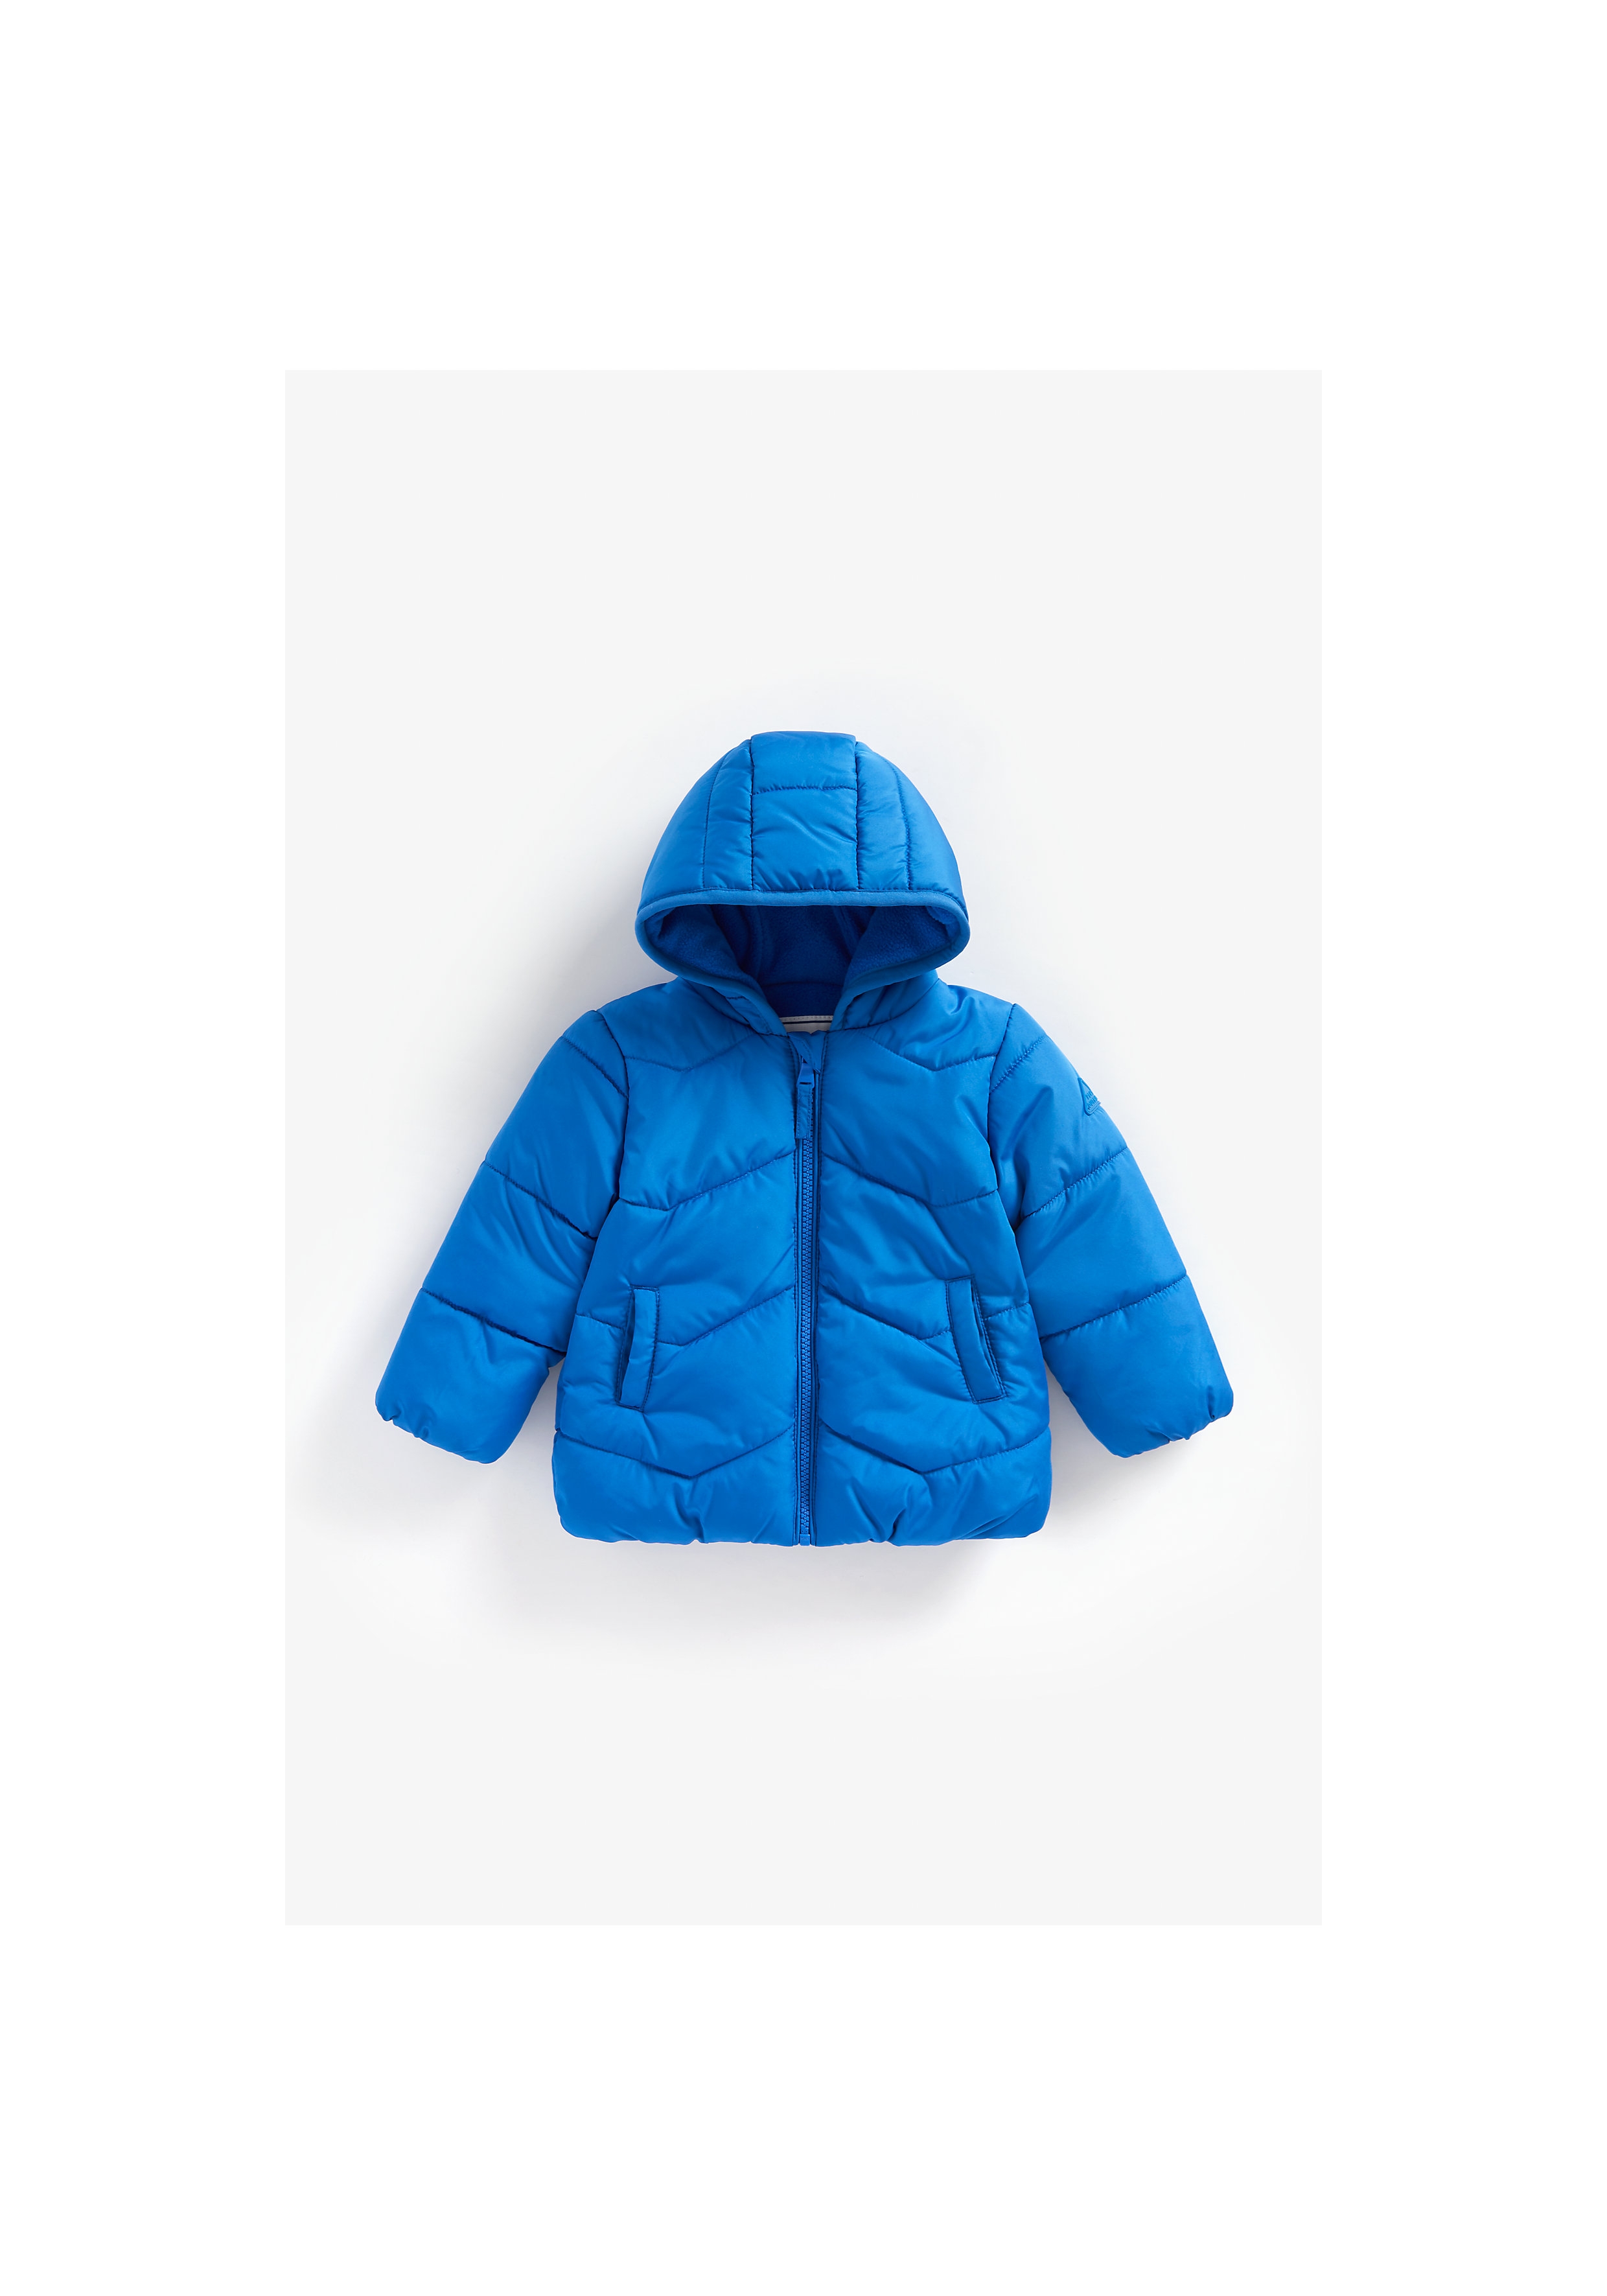 Mothercare | Boys Full Sleeves Fleece Lined Jacket Hooded - Blue 0